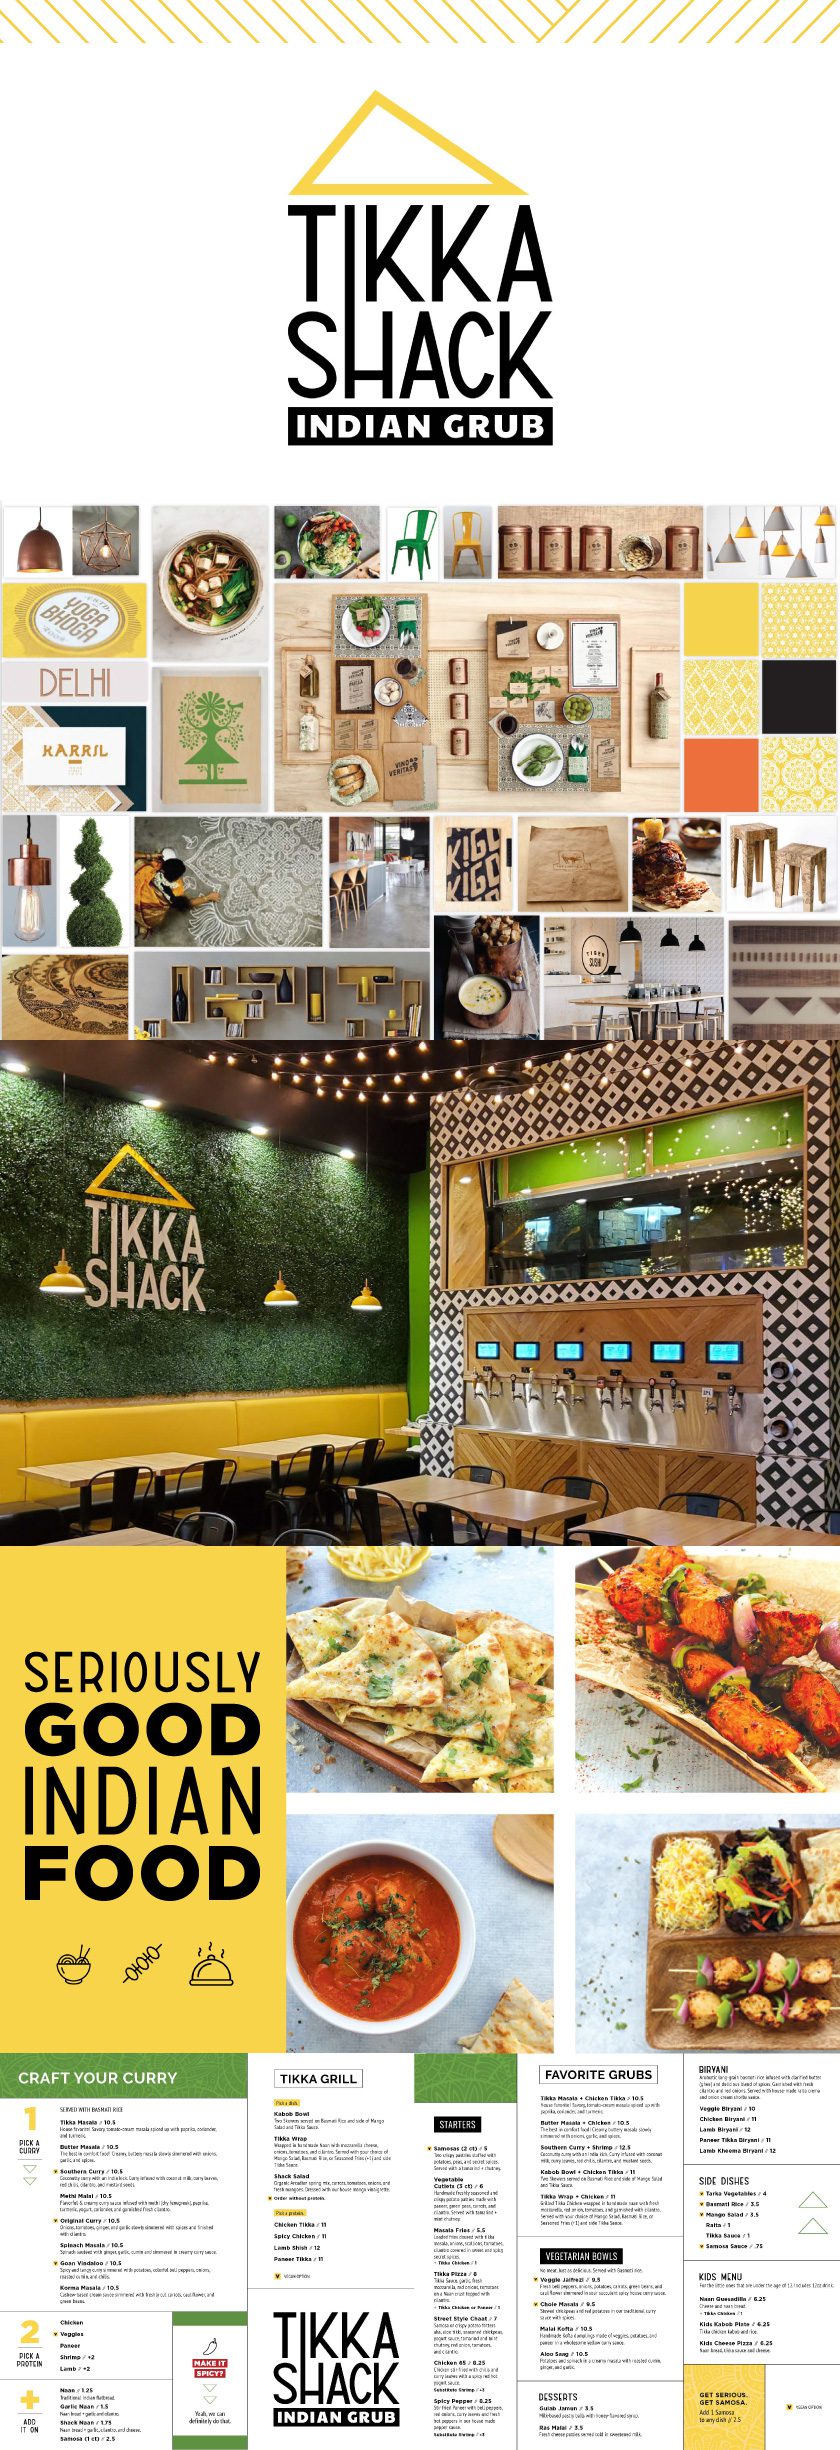 Tikka Shack Indian Grub Restaurant Branding